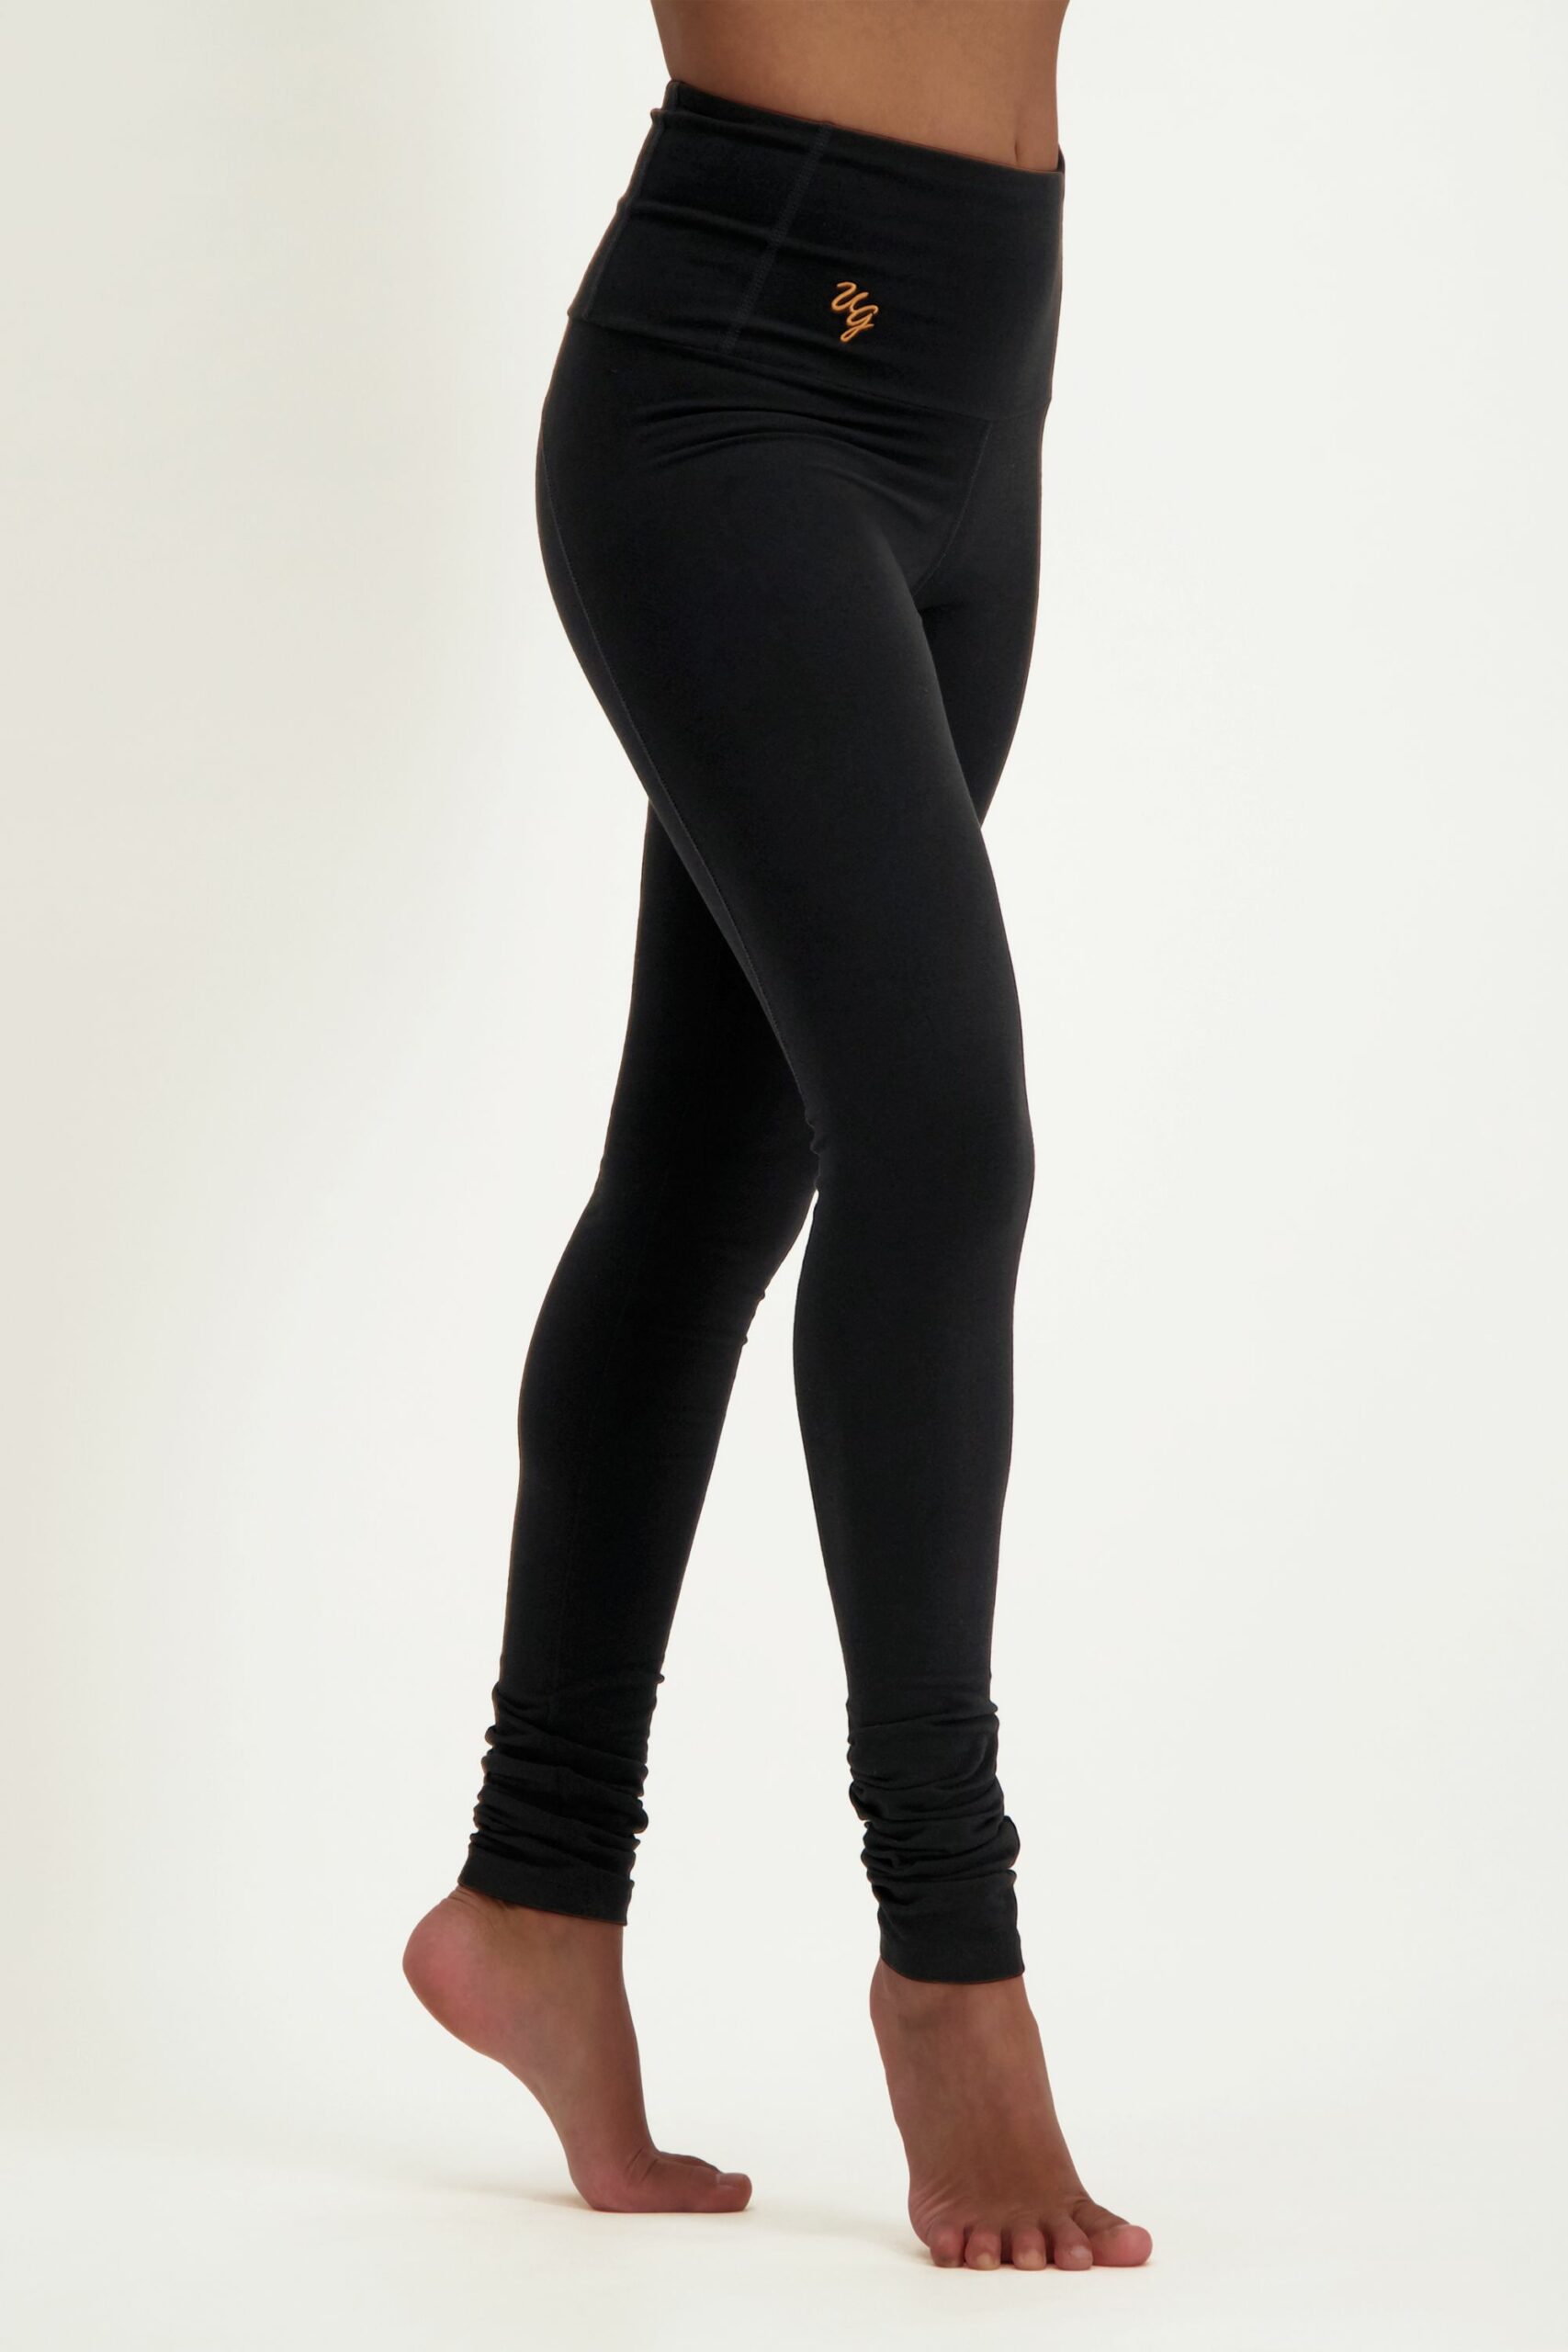 Gaiam Black Om-Dri Solid High Rise Yoga Leggings W/Ruched Shirred Ankles  Small